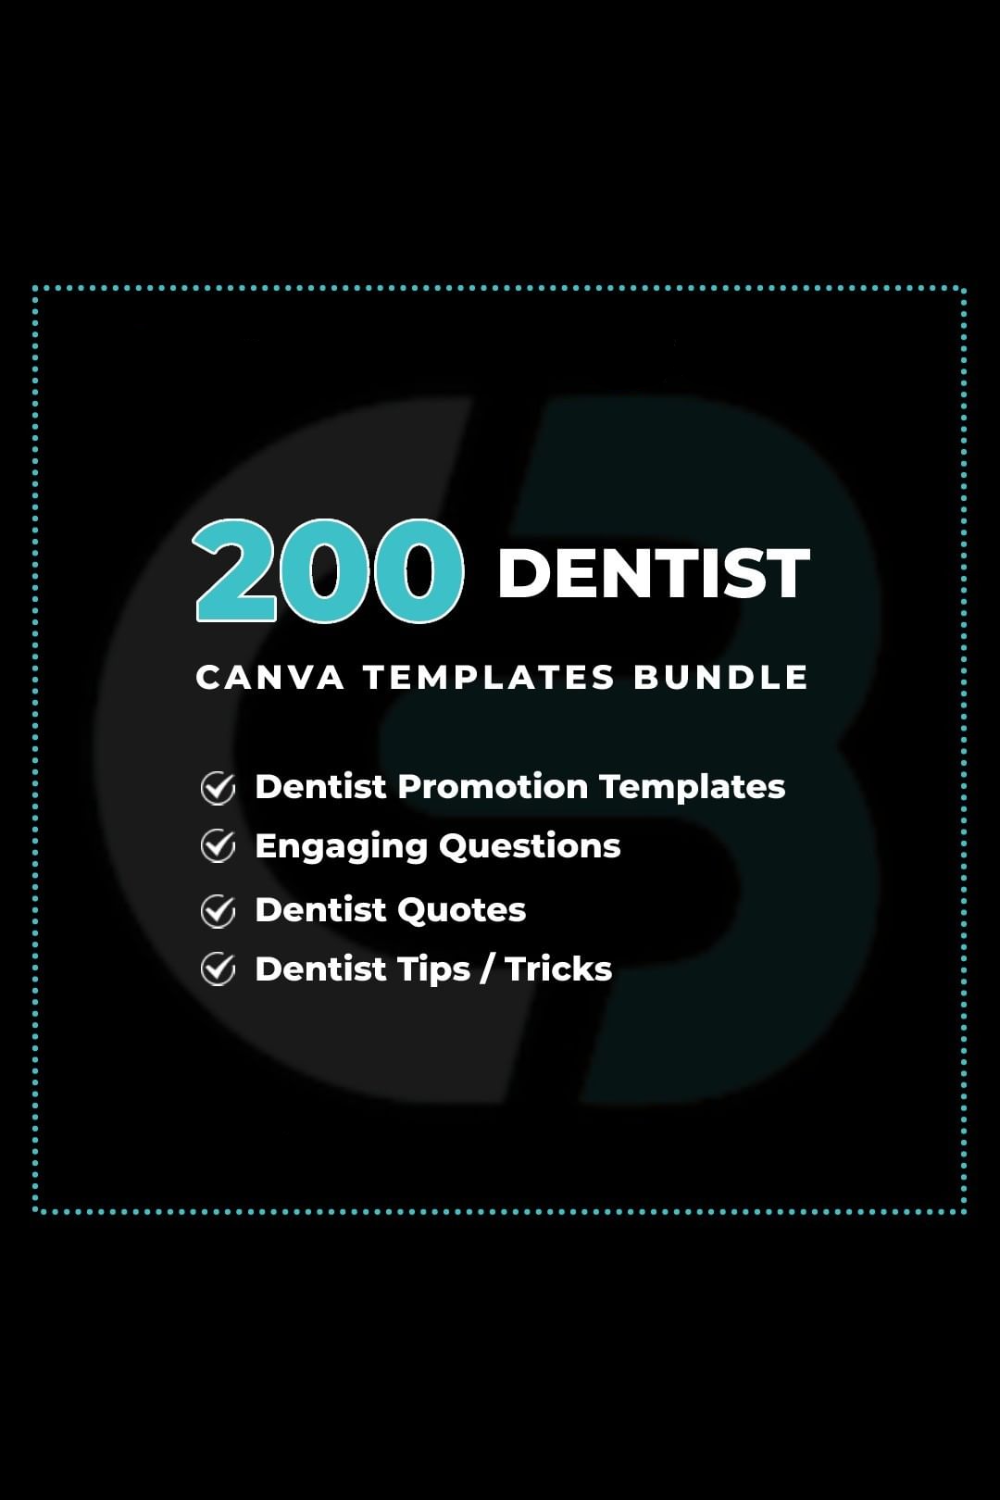 Dentist Canva Templates Bundle Pinterest image.